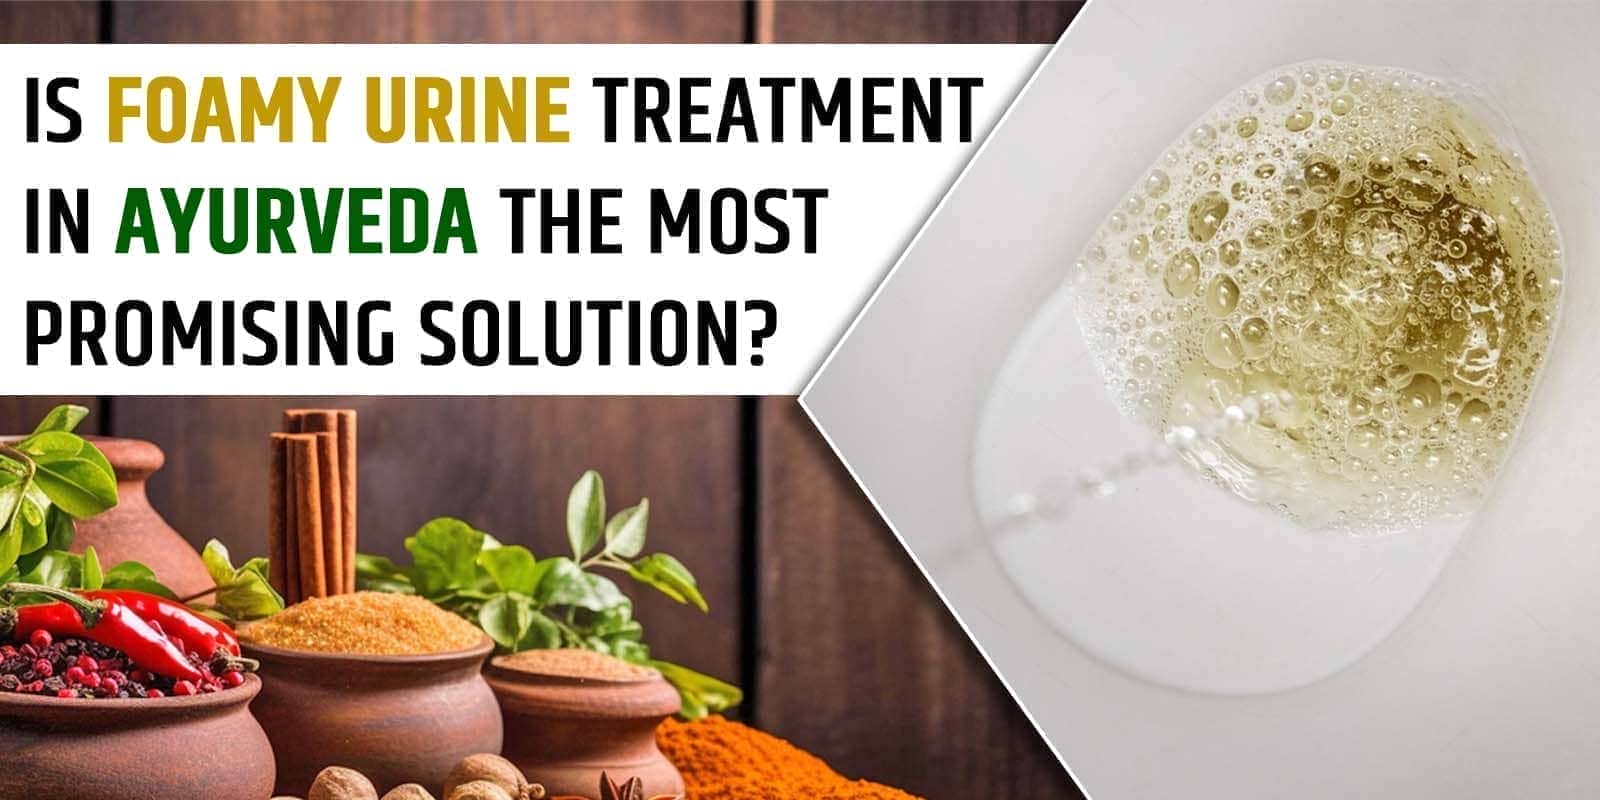 Foamy Urine Treatment in Ayurveda - Effective Solutions